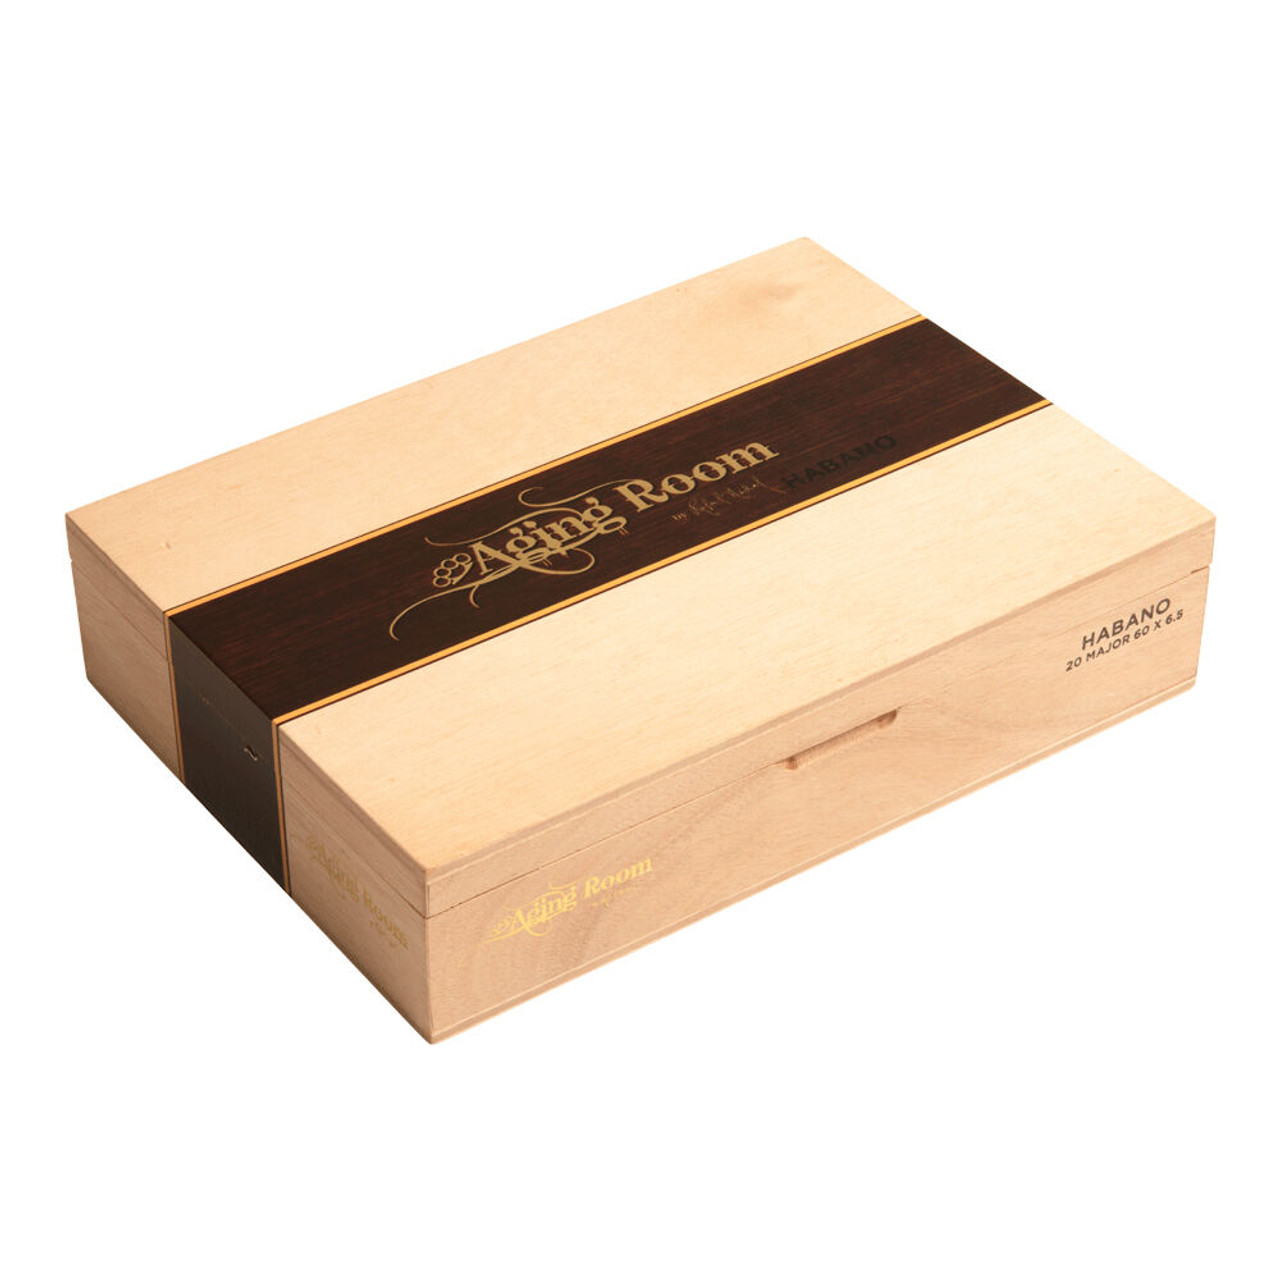 Aging Room Core by Rafael Nodal Habano Major Cigars - 6.5 x 60 (Box of 20) *Box